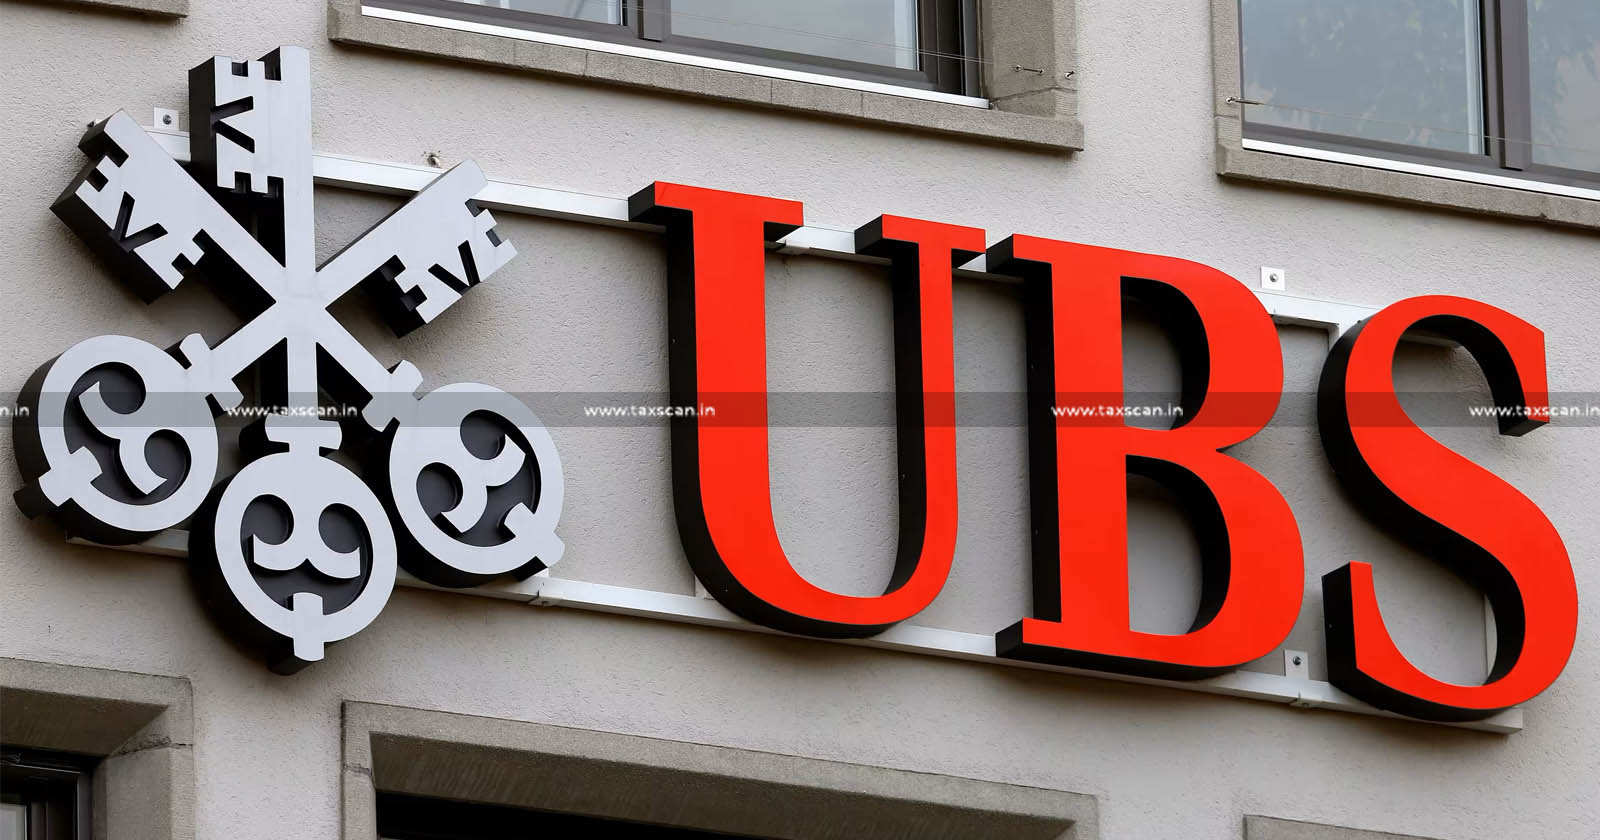 CA - B. Com Vacancy in UBS - CA Vacancy in UBS - UBS - CA Vacancy - B. Com Vacancy - UBS - Vacancy - Taxscan